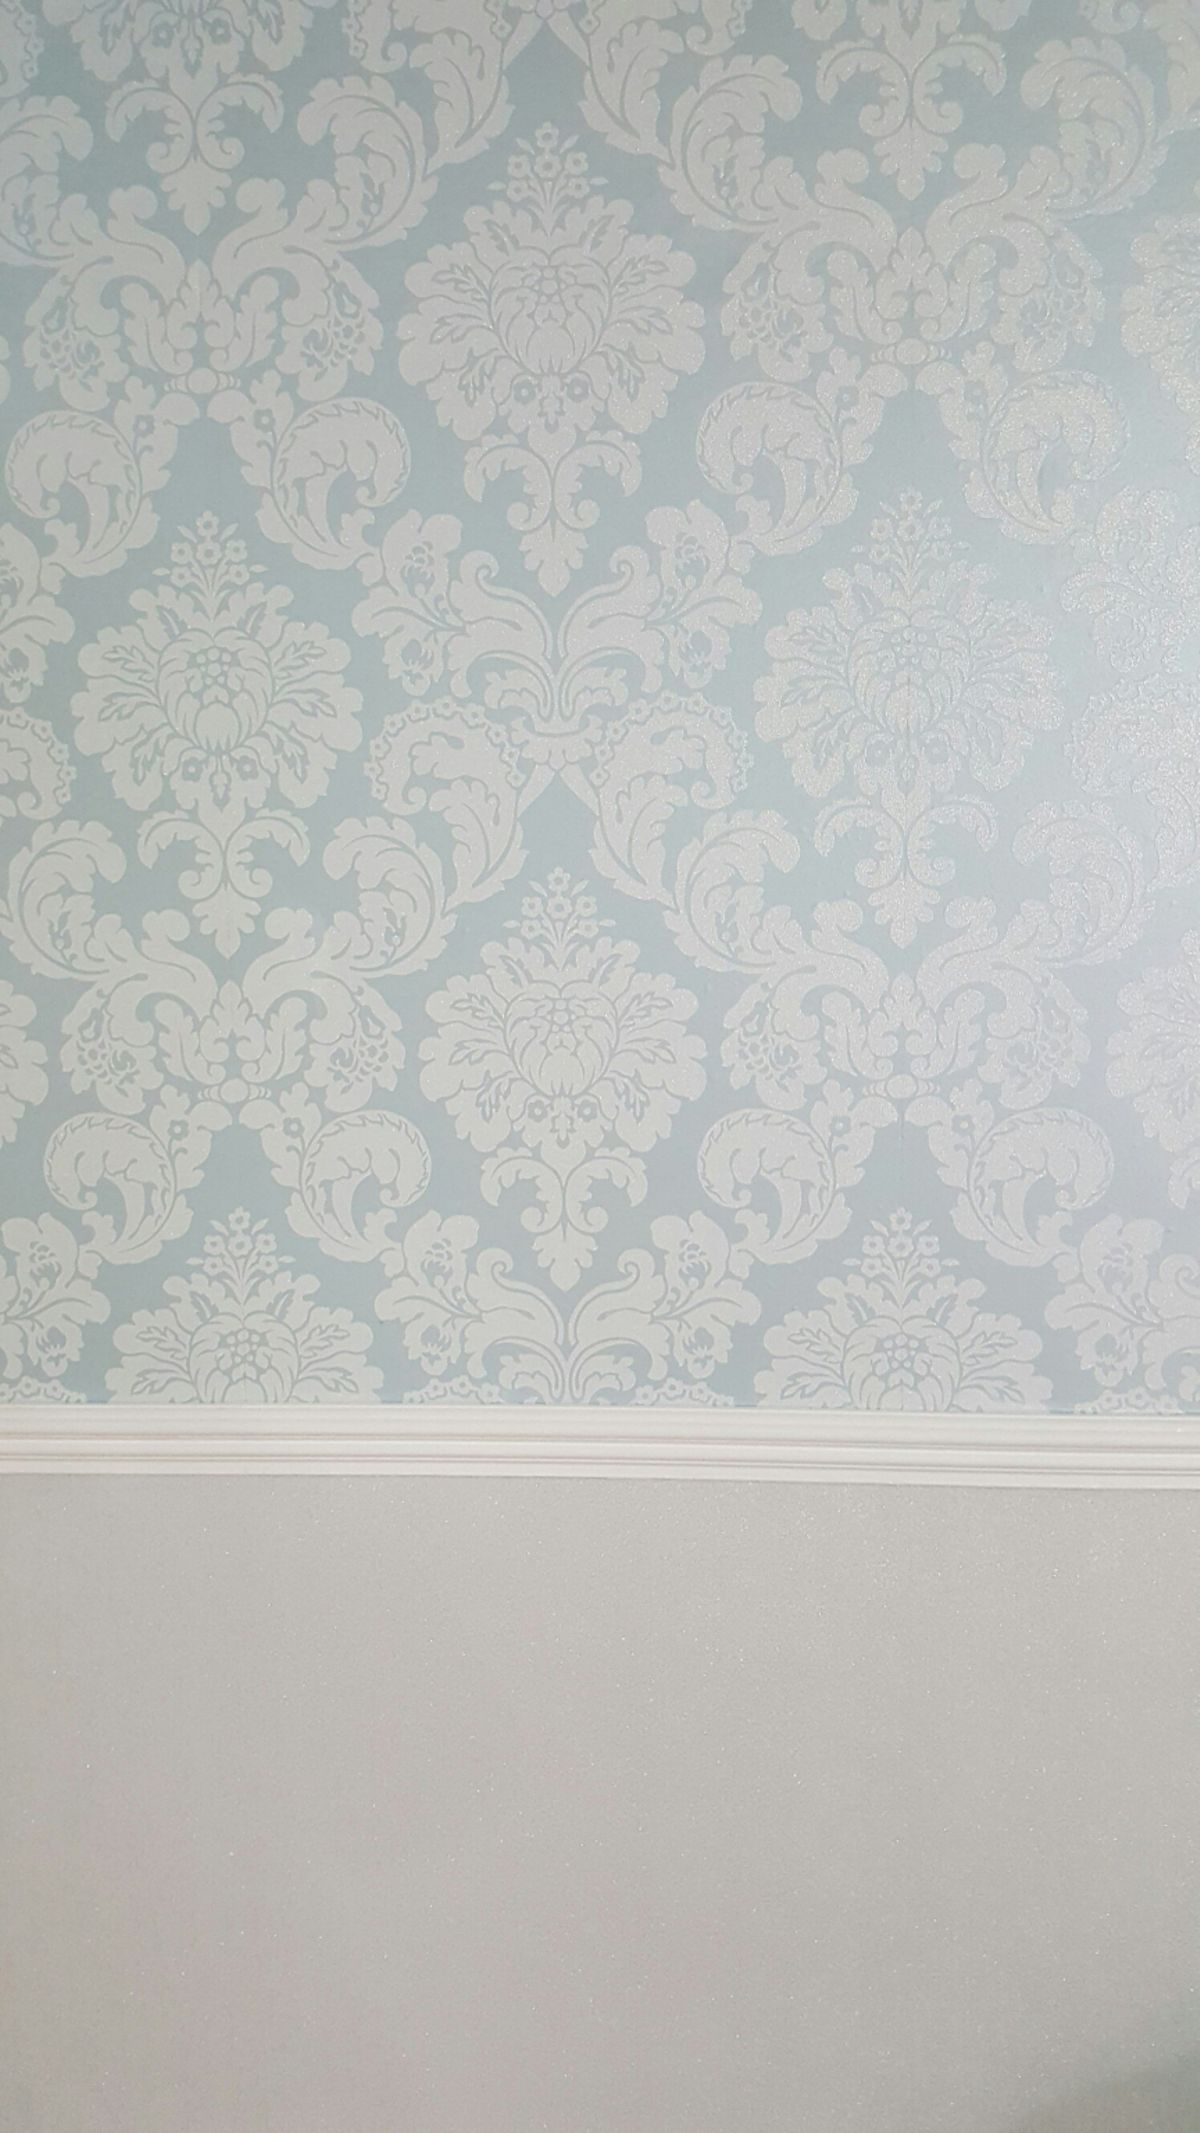 2x Rolls Damask Ice Blue/green Wallpaper £30
2x Rolls - Wallpaper - HD Wallpaper 